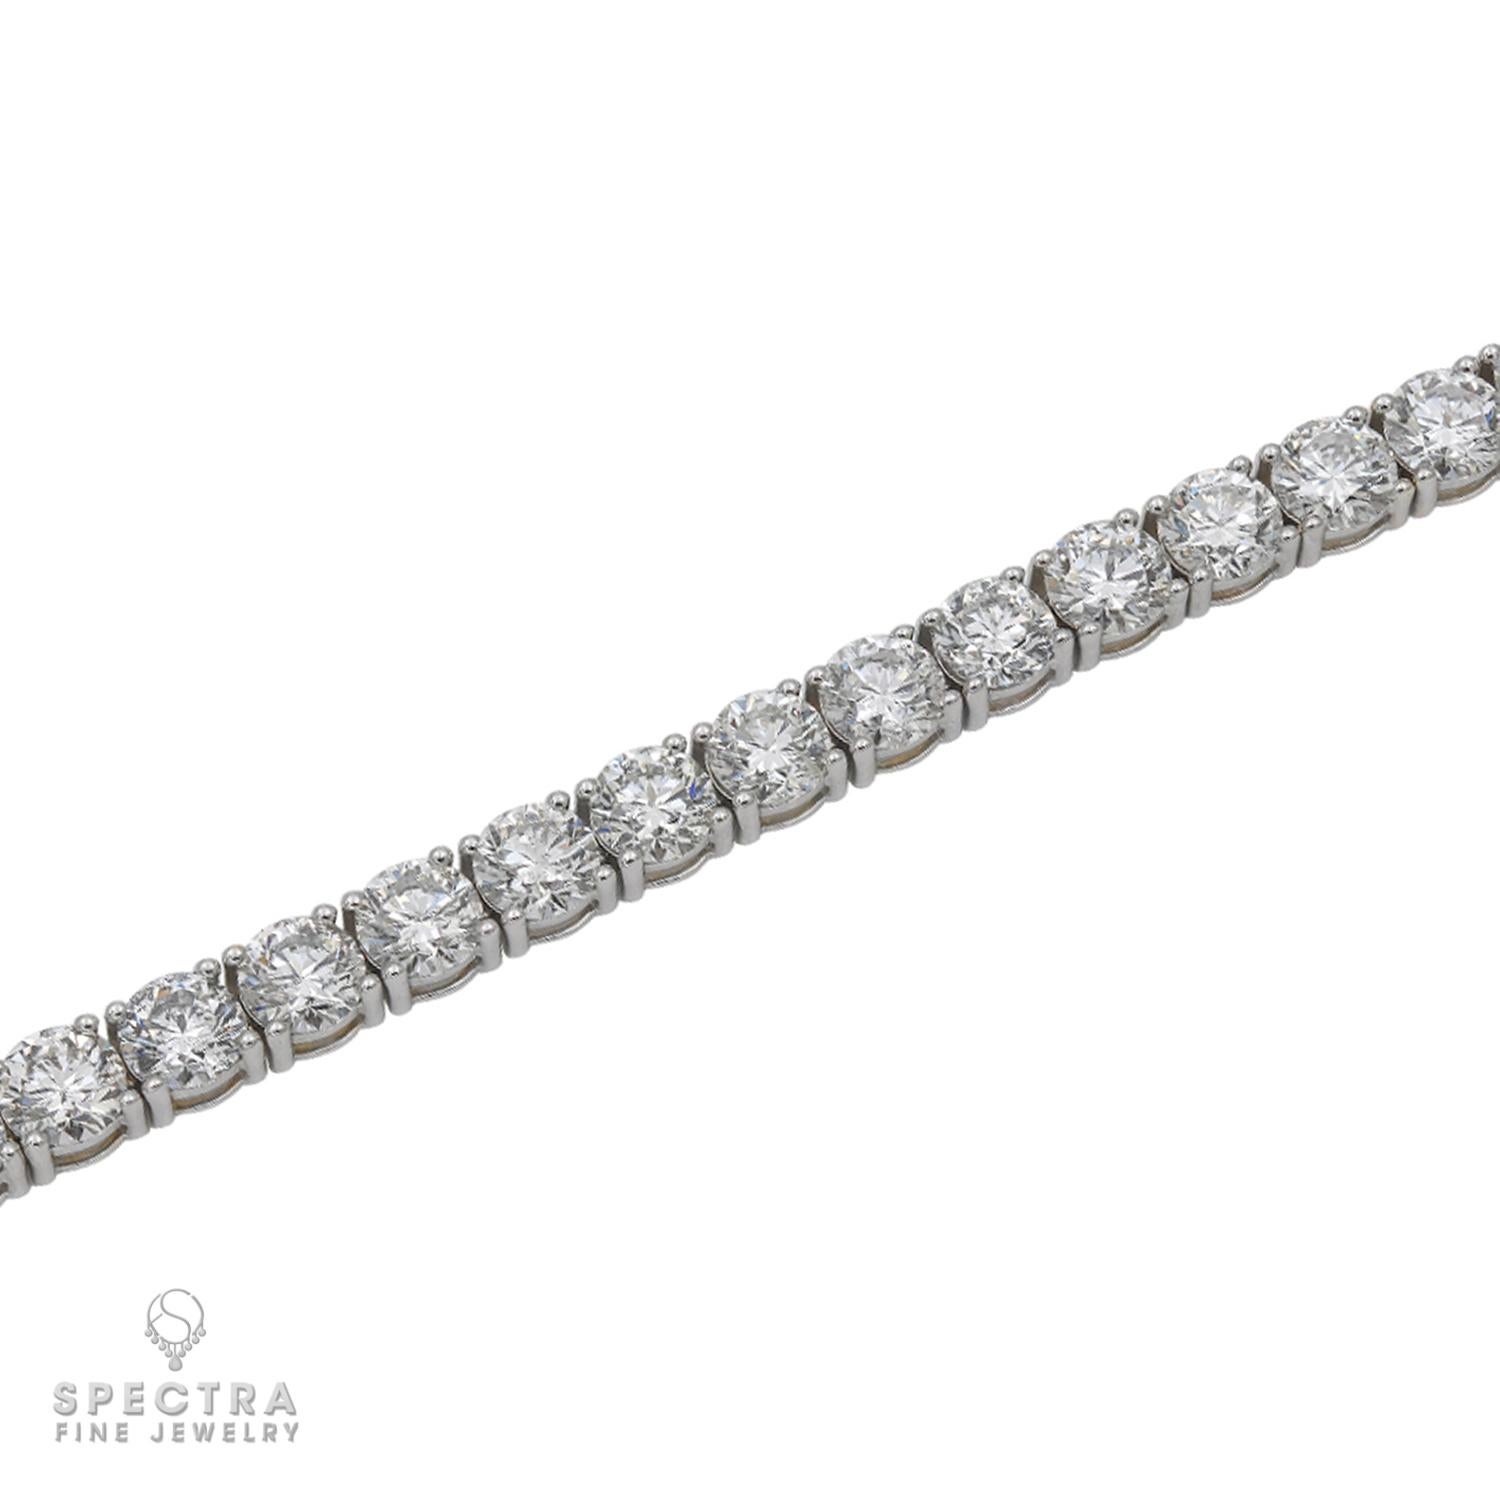 Contemporary Spectra Fine Jewelry 21.05 Carat Round Diamond Tennis Bracelet For Sale